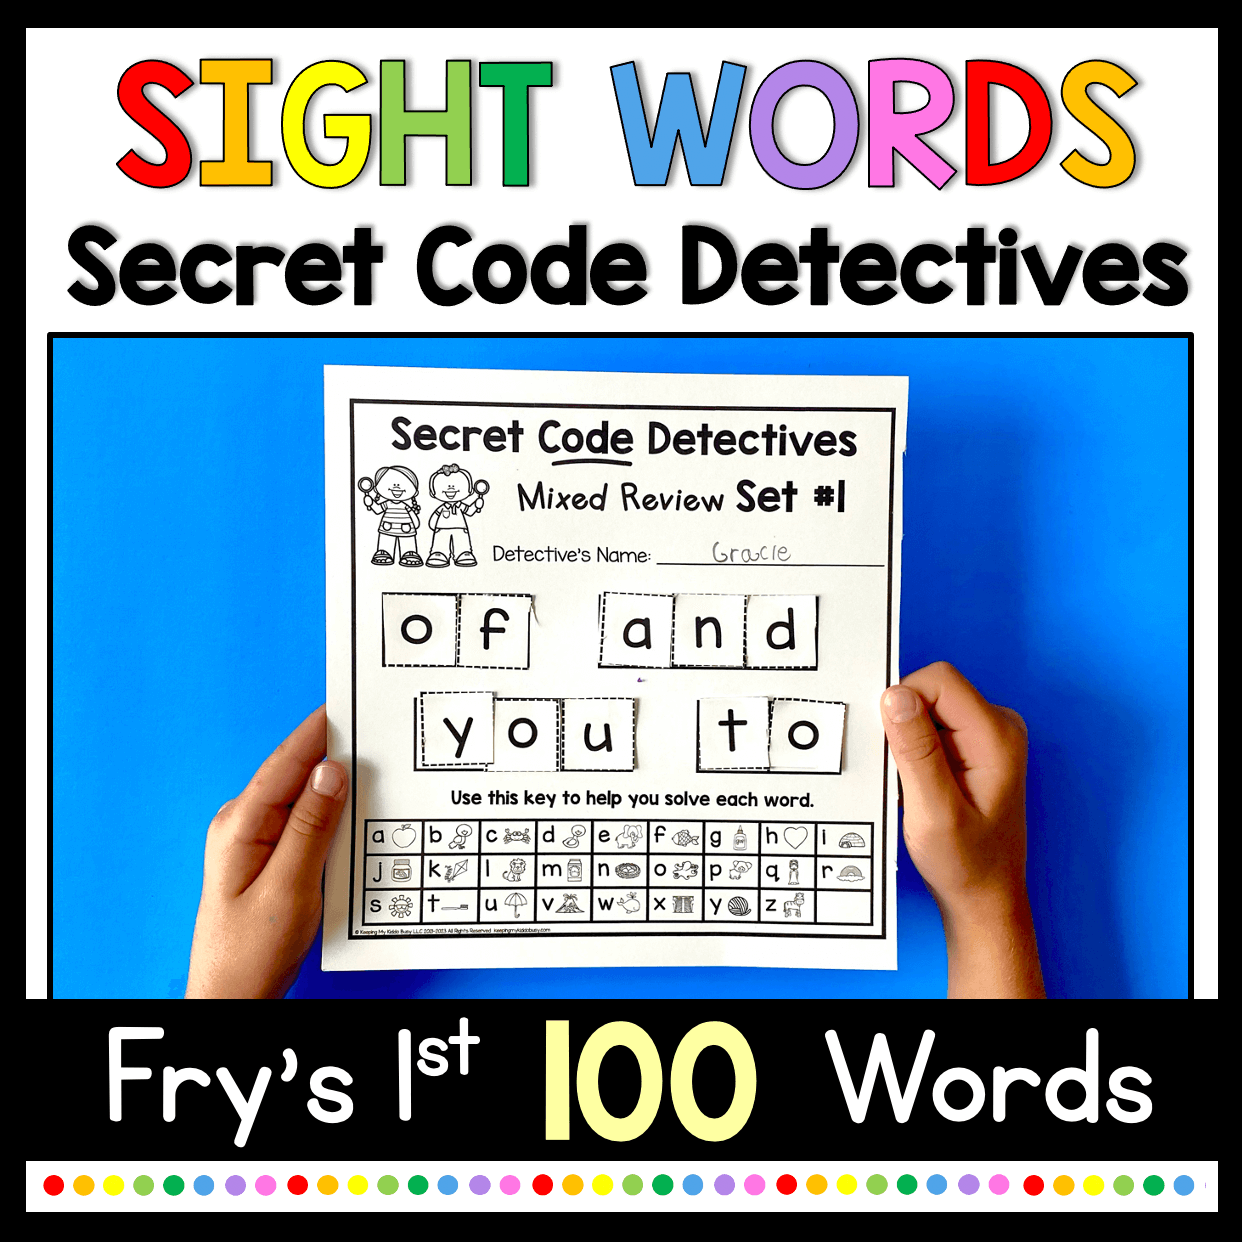 Secret Code Detective